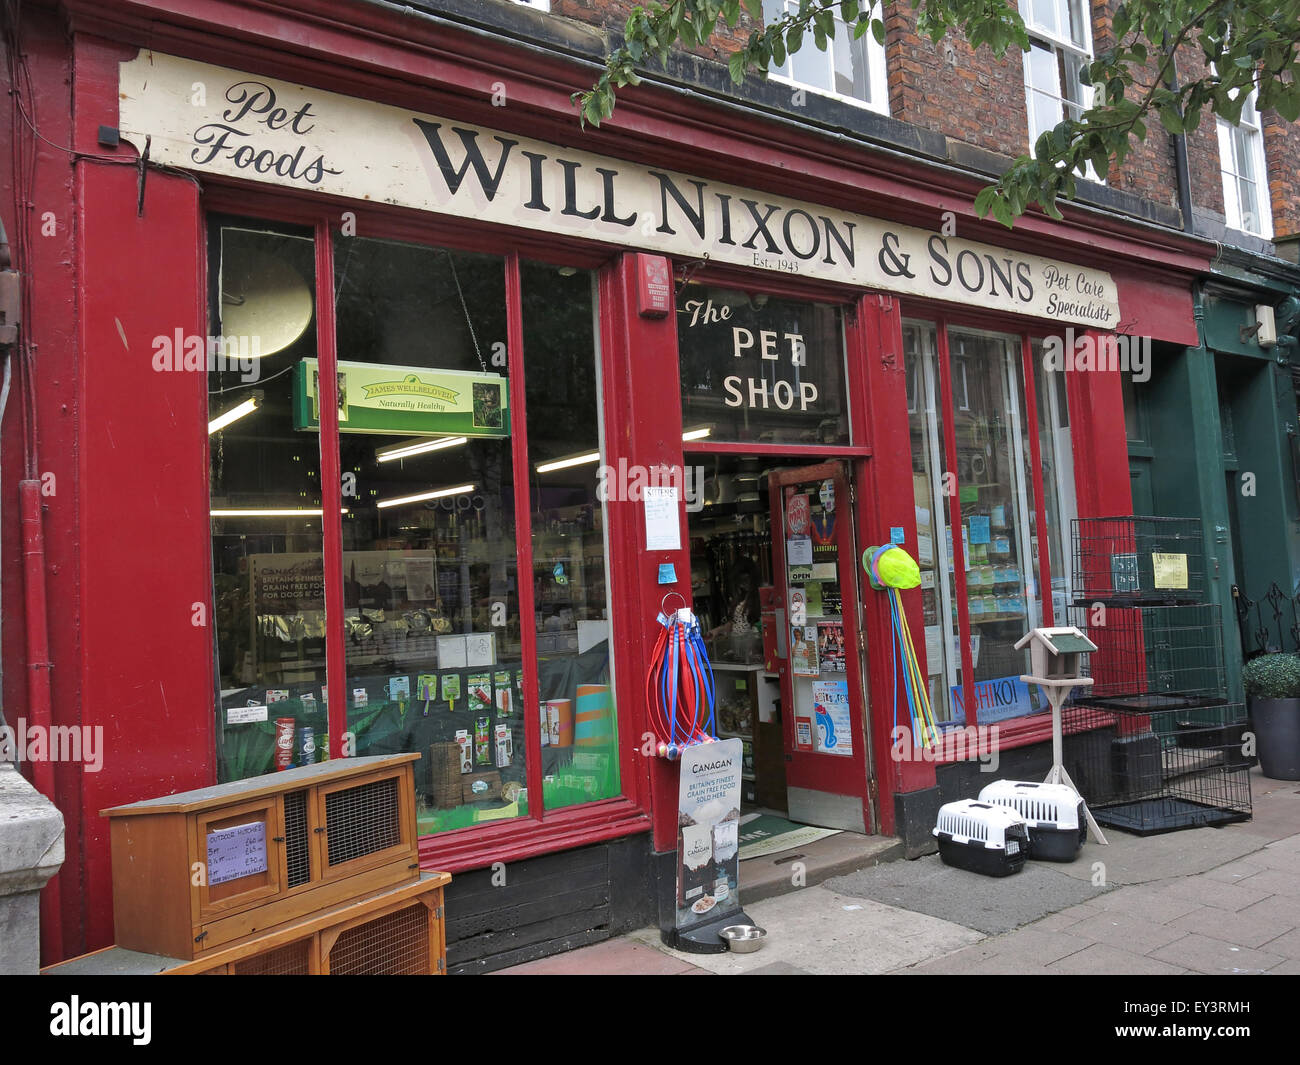 Will Nixon and sons,traditional Carlisle pet shop,Cumbria,England,UK Stock Photo